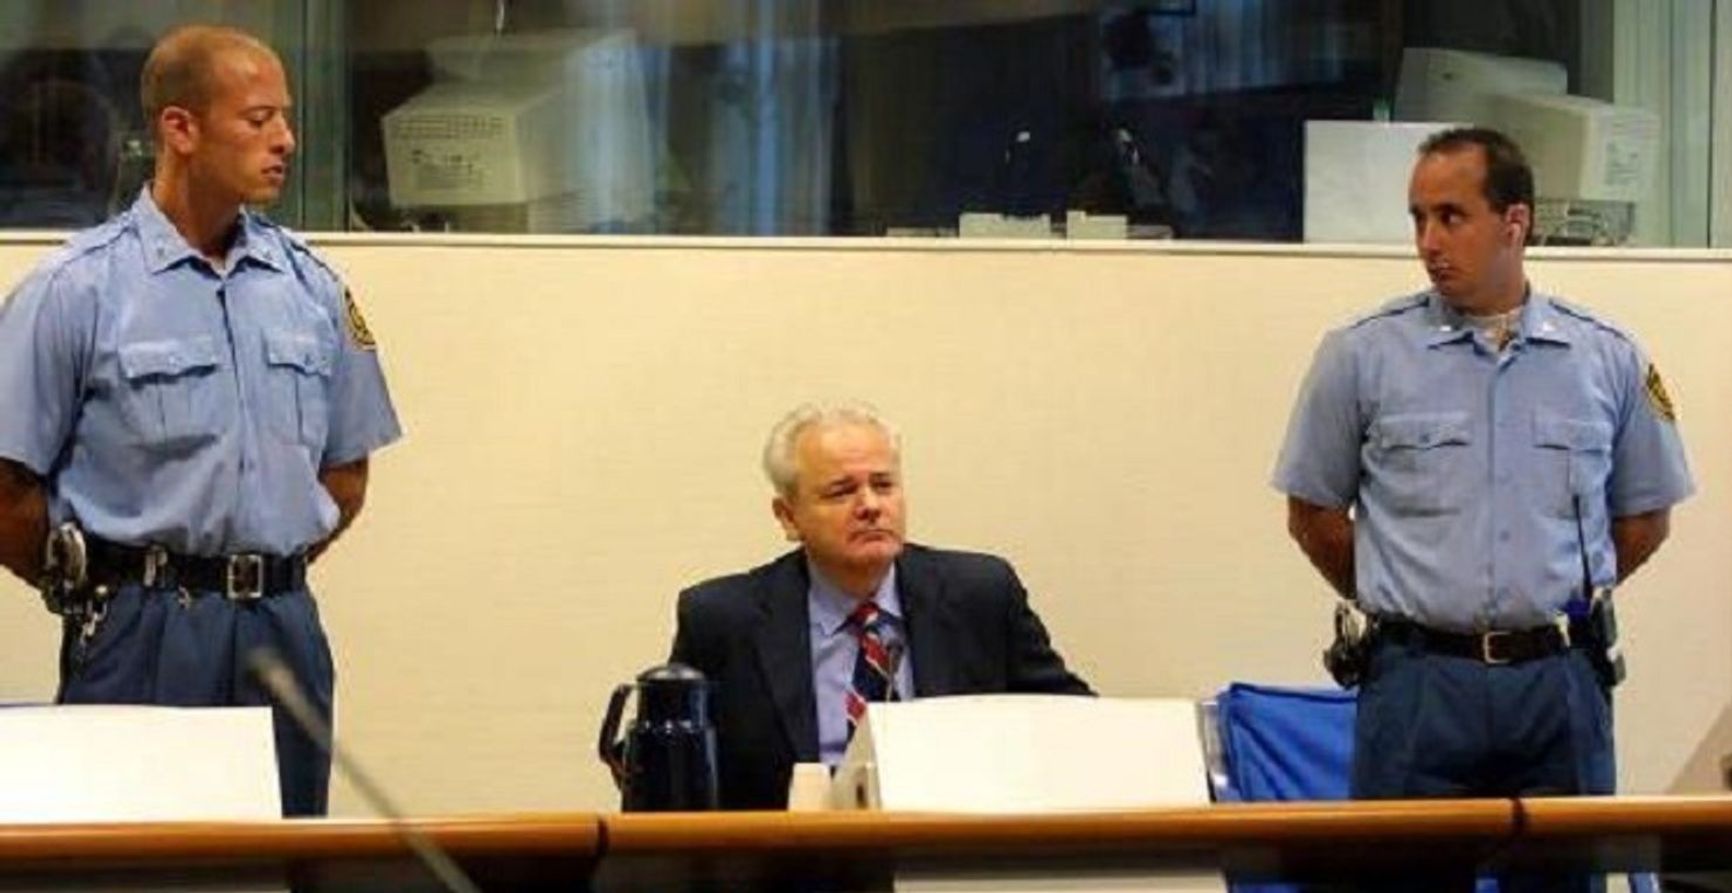 Slobodan Milošević in the defendant's seat